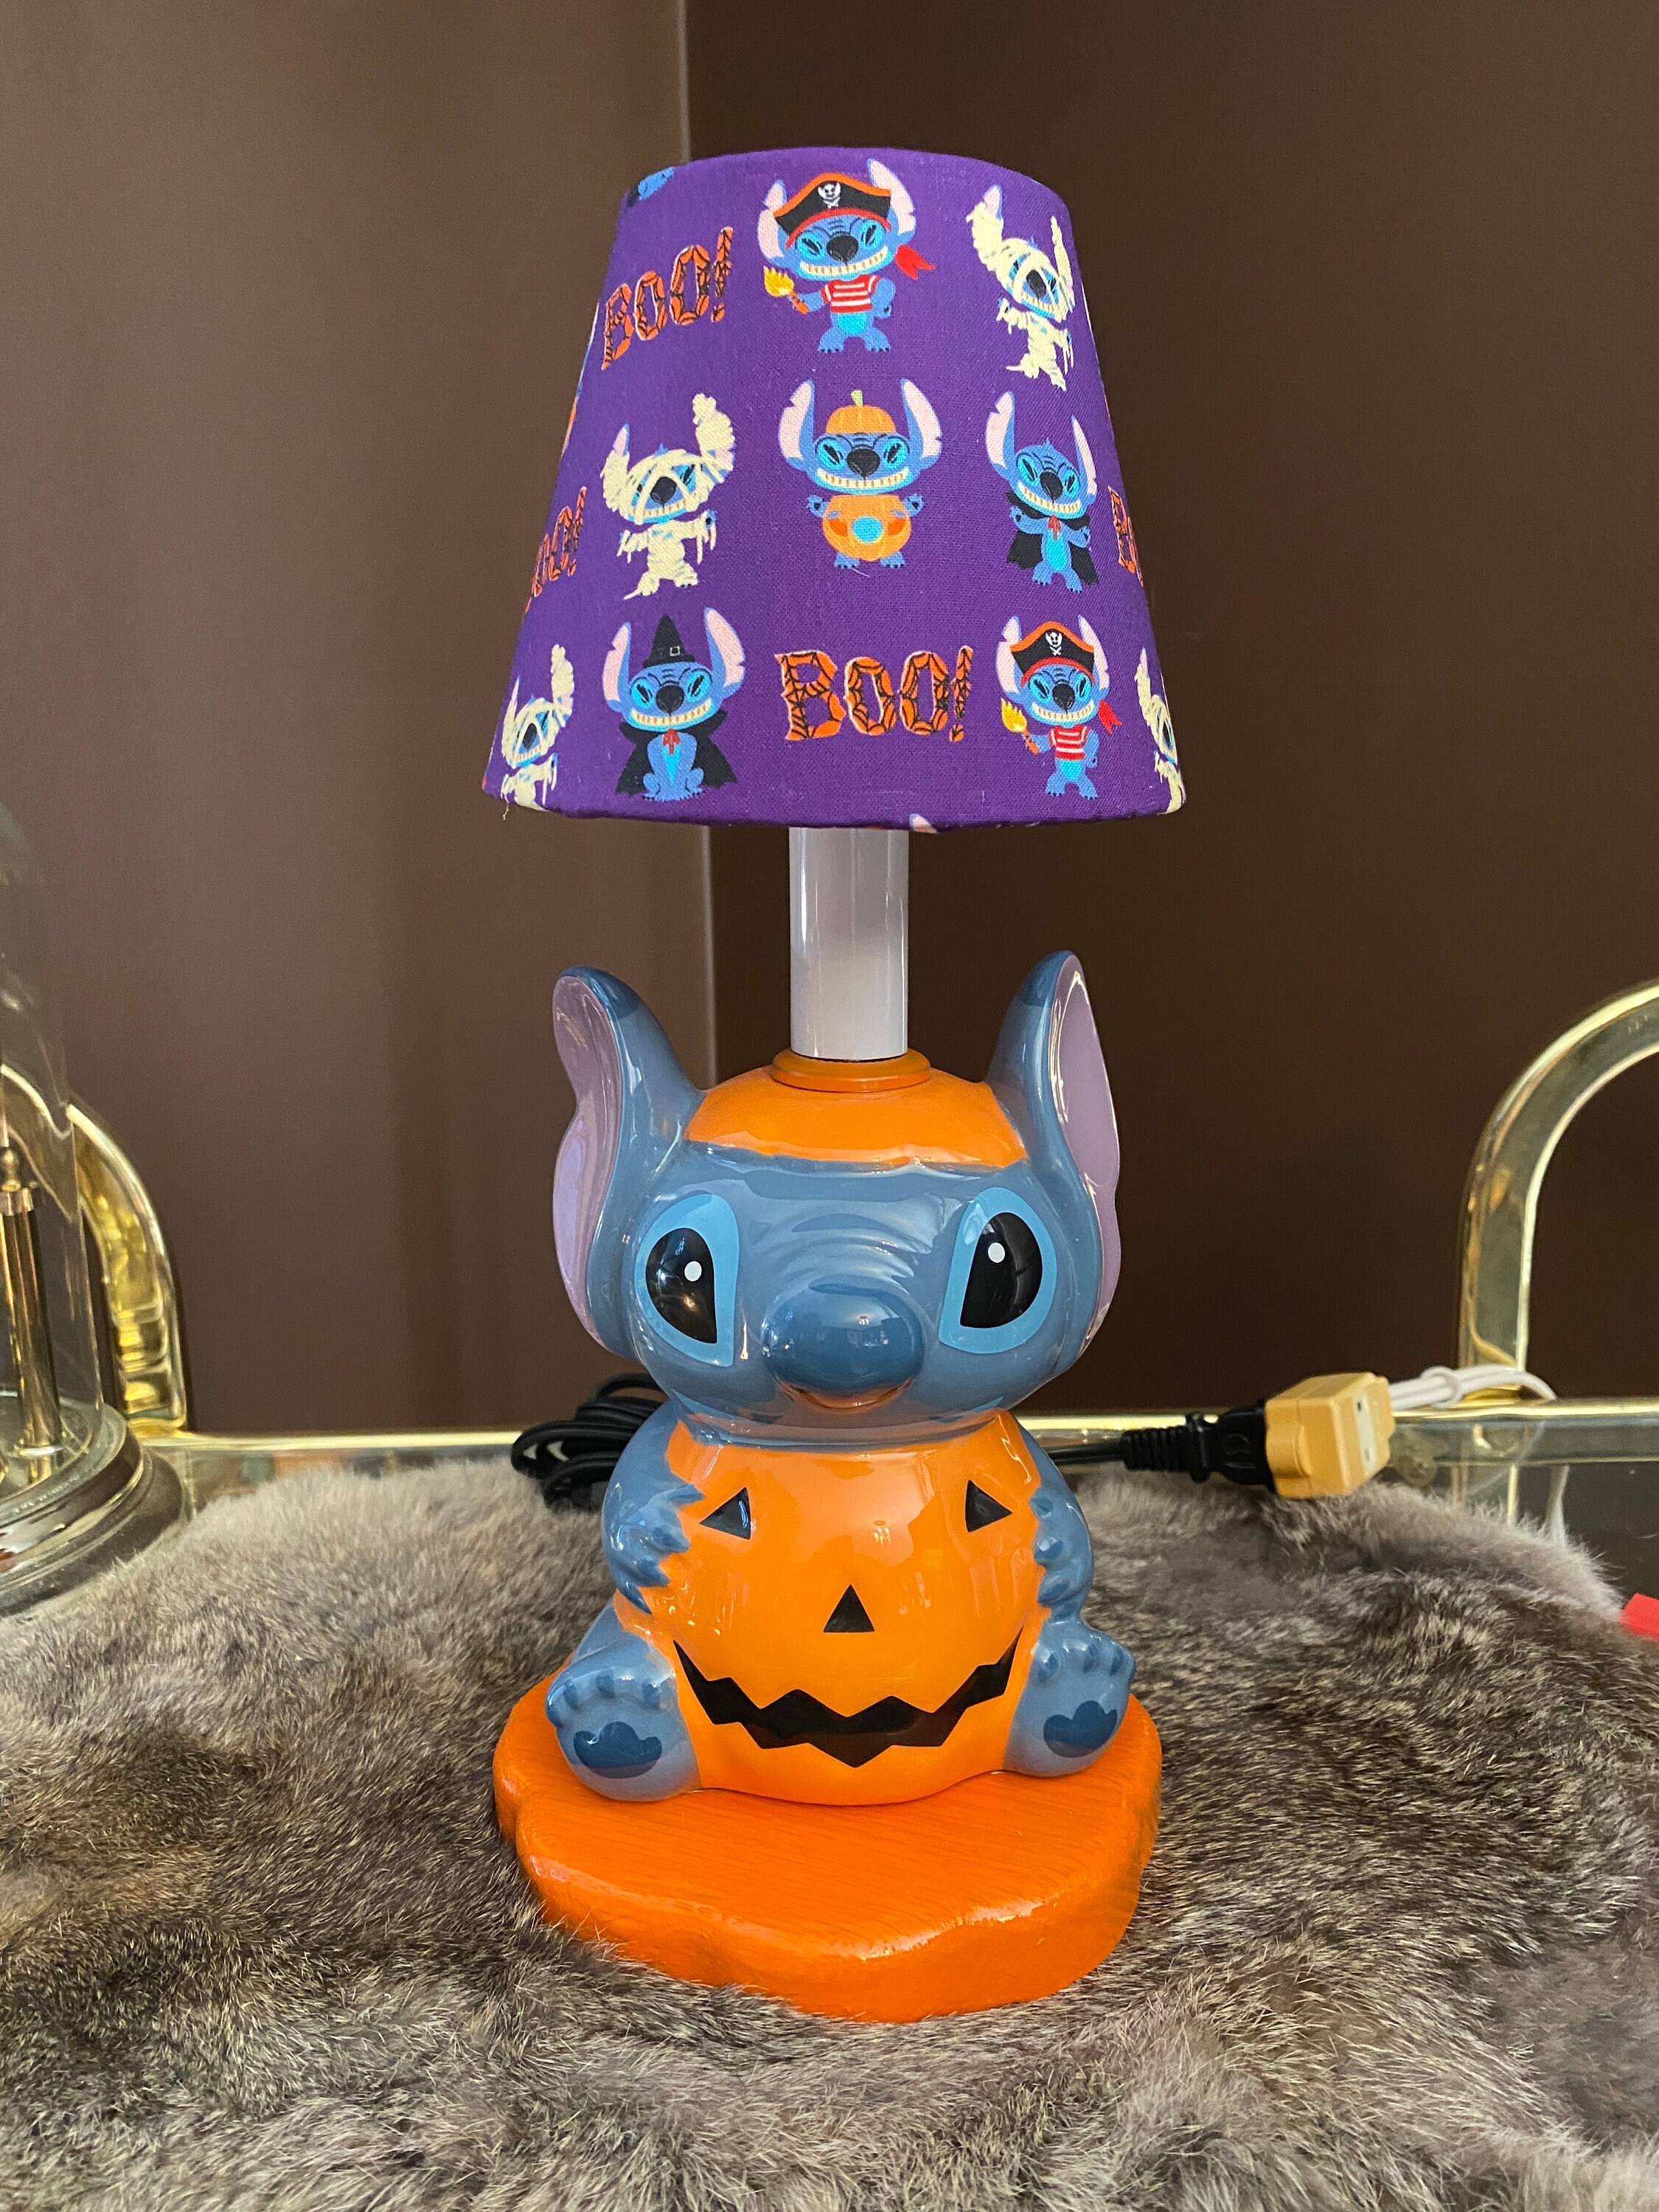 TIMPCV Lovely Stitch 3D LED Night Light, Cartoon Lilo & Stitch Table Lamp,  Girls Desk Lamp, Baby Bedroom Sleeping Night Lamp, Bedside Lamp, Birthday